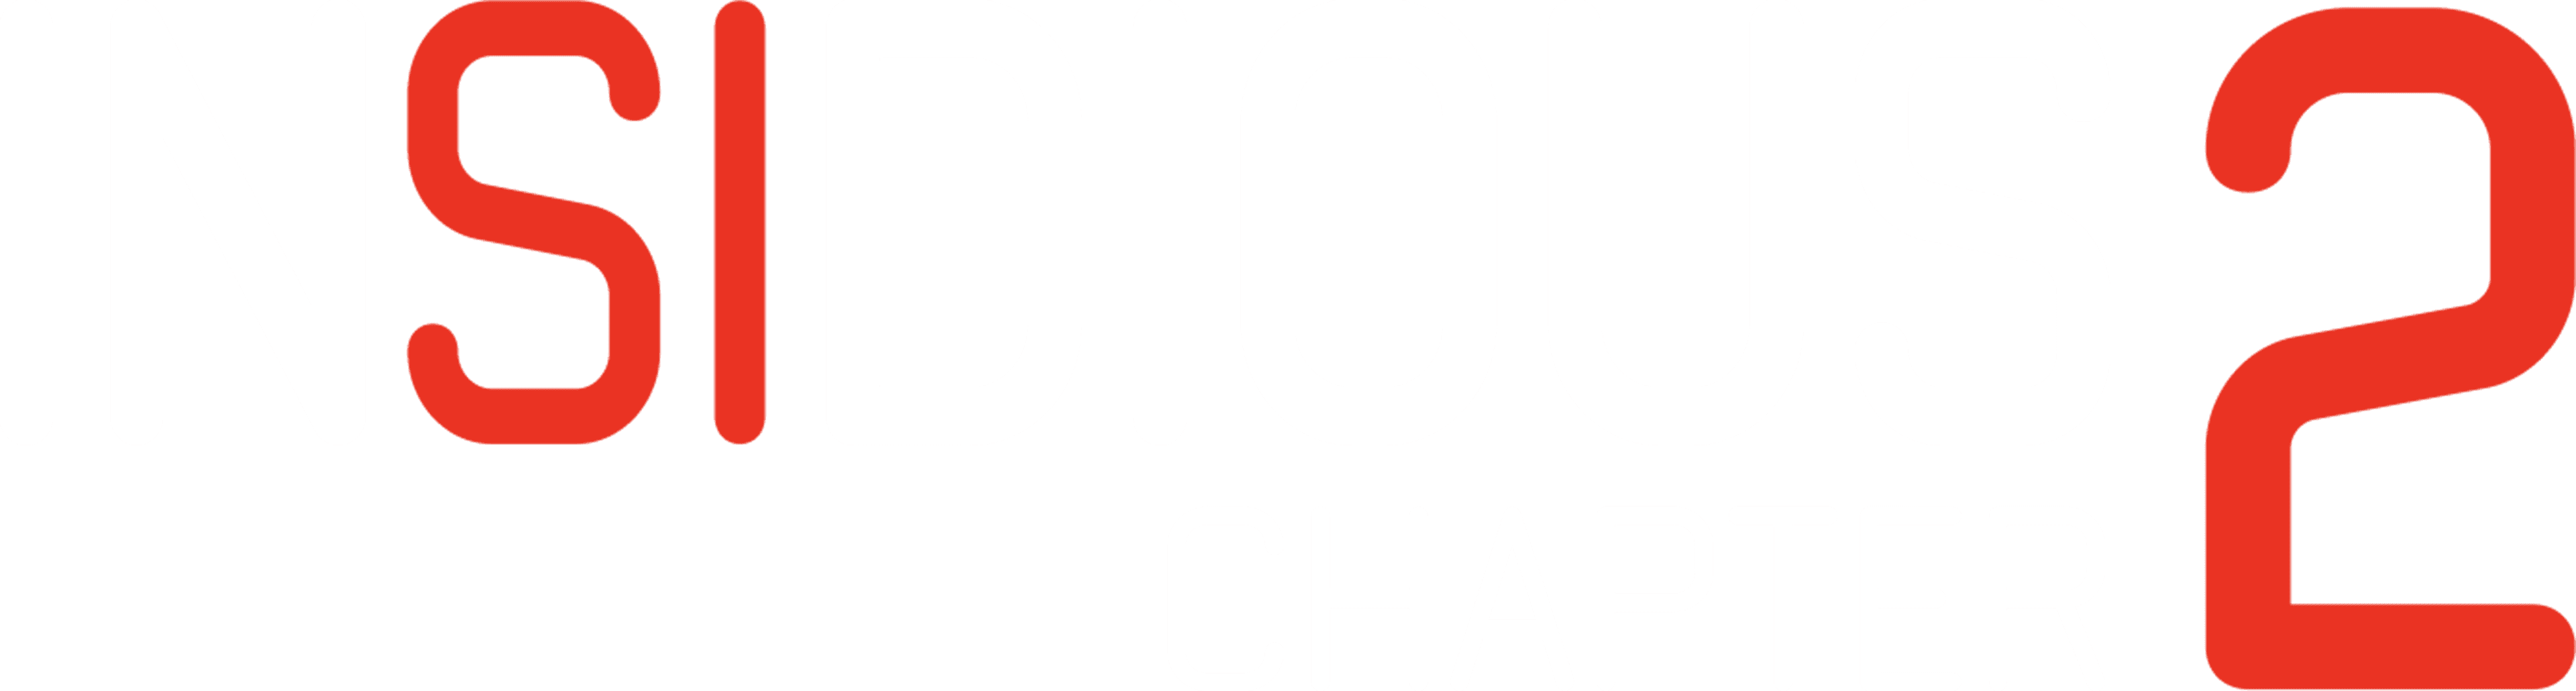 Insidious: Chapter 2 logo